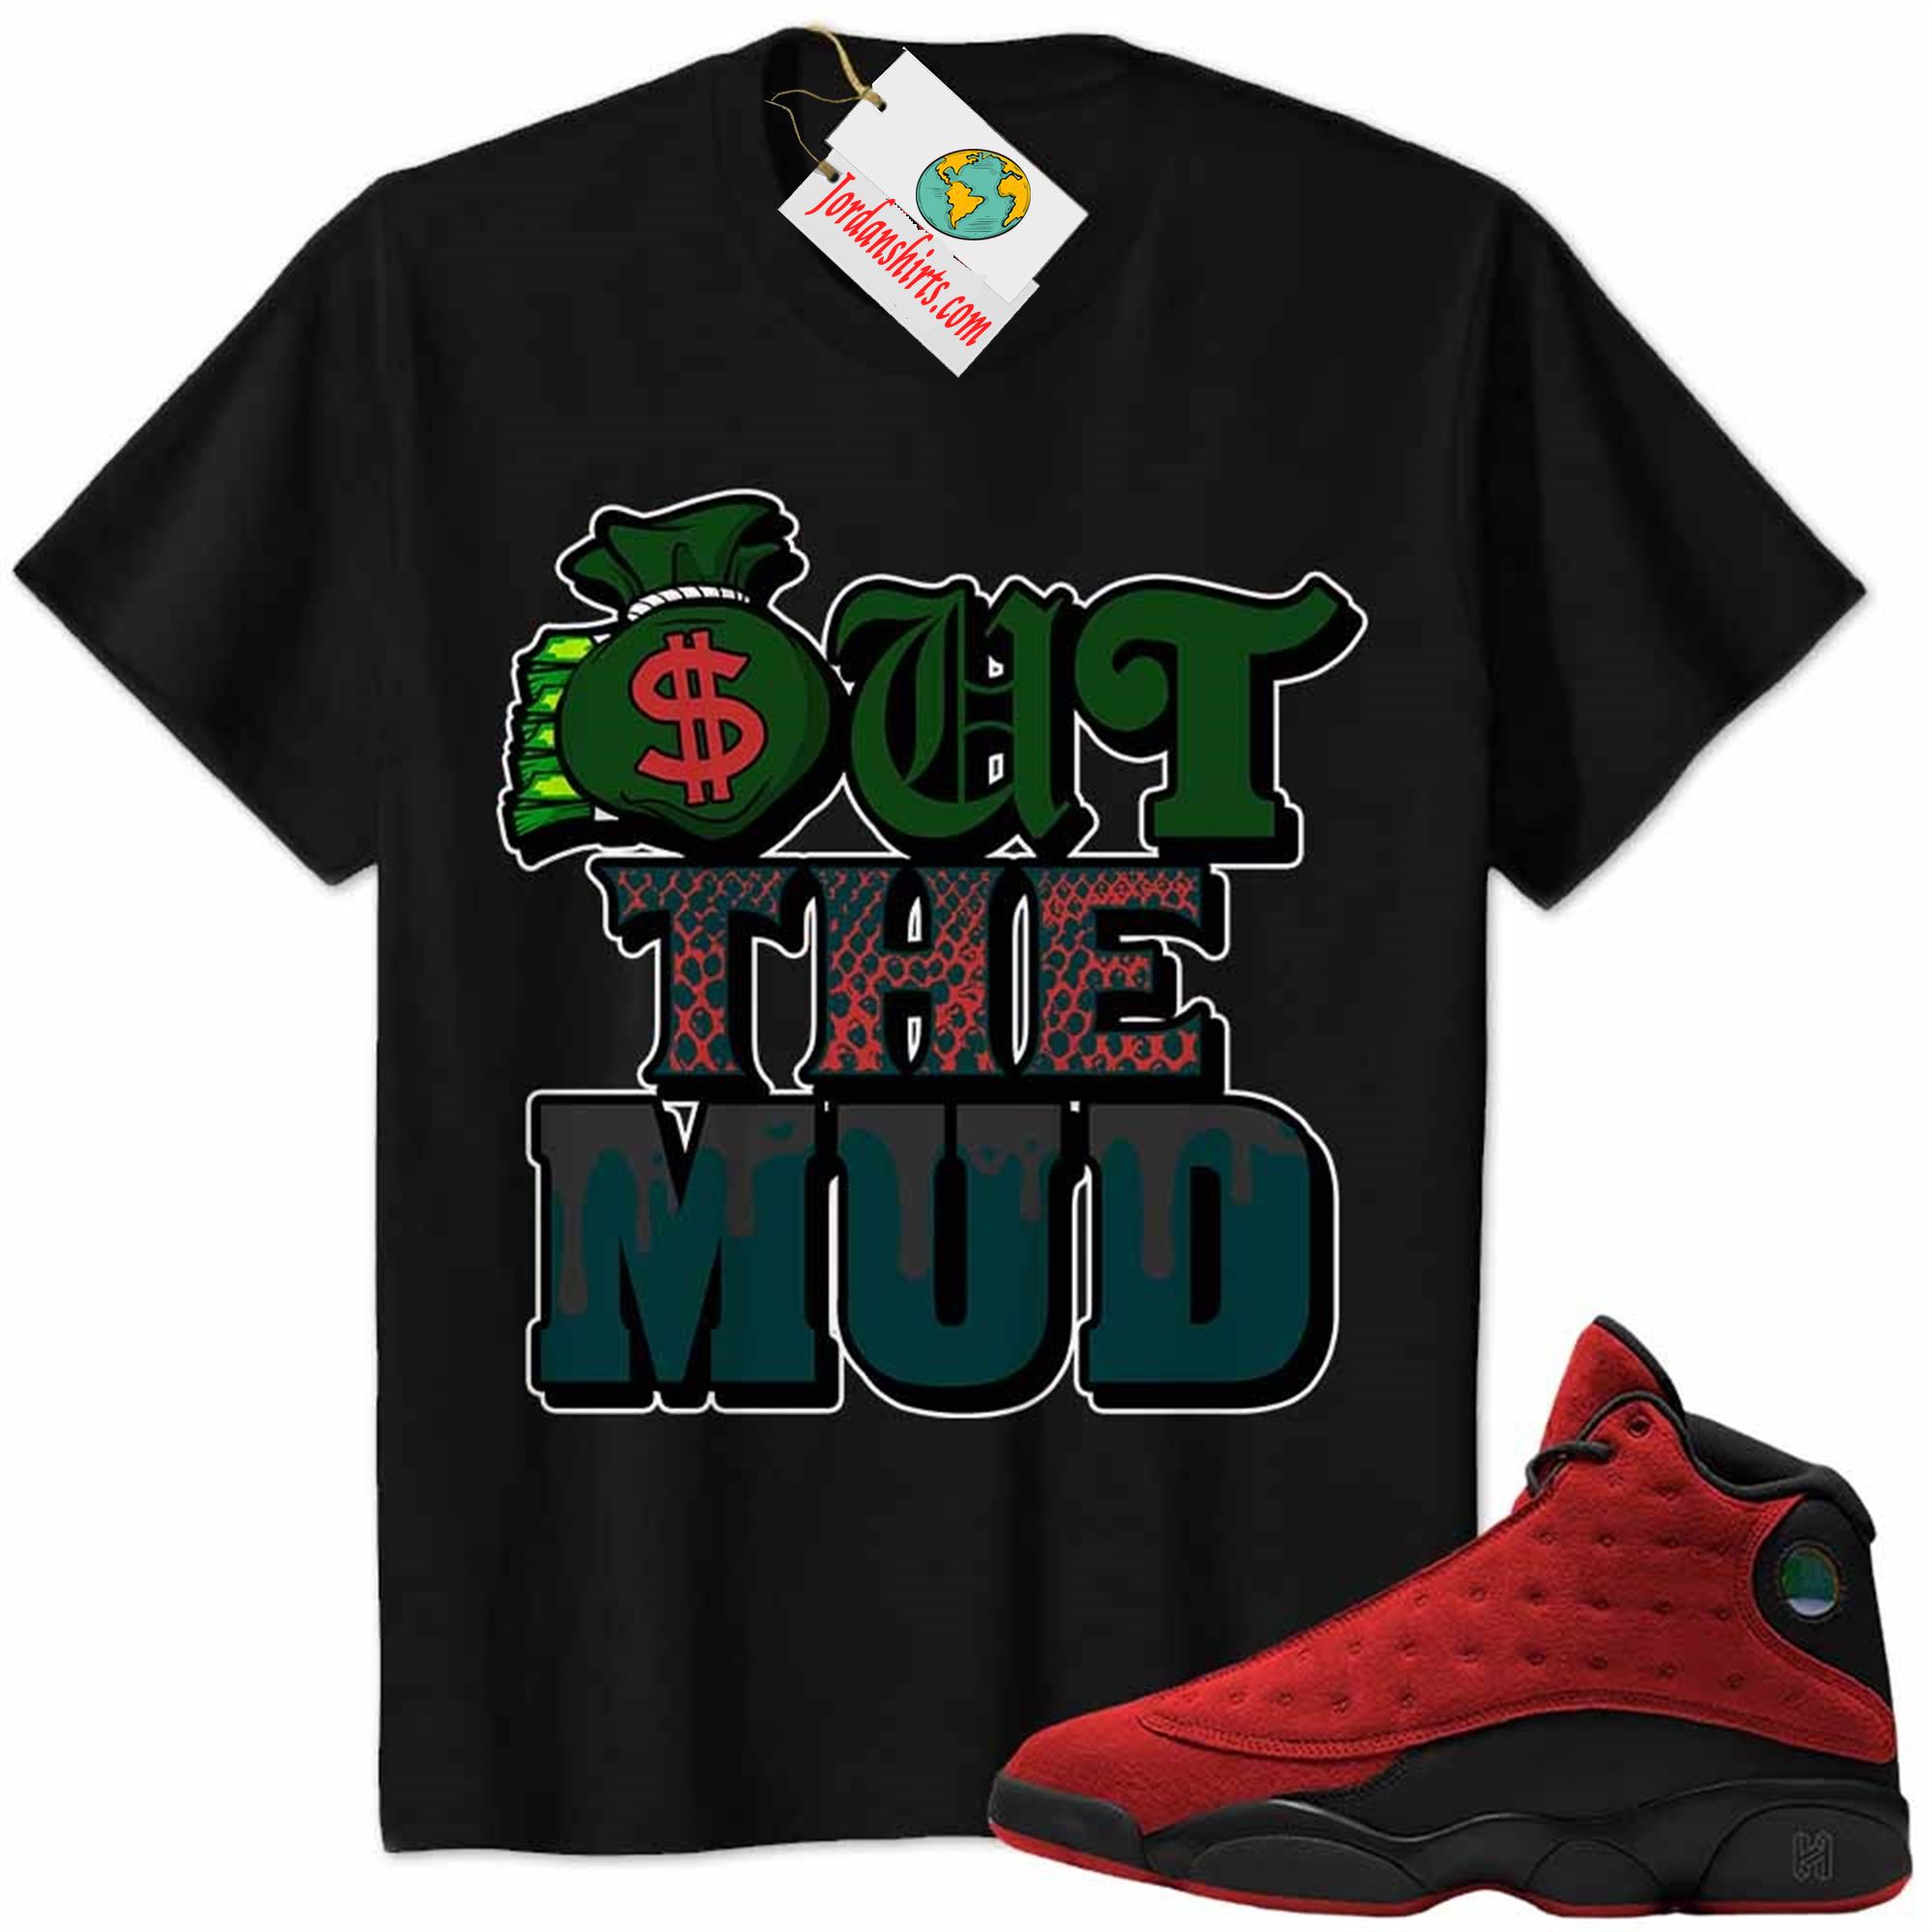 Jordan 13 Shirt, Jordan 13 Reverse Bred Shirt Out The Mud Money Bag Black Plus Size Up To 5xl